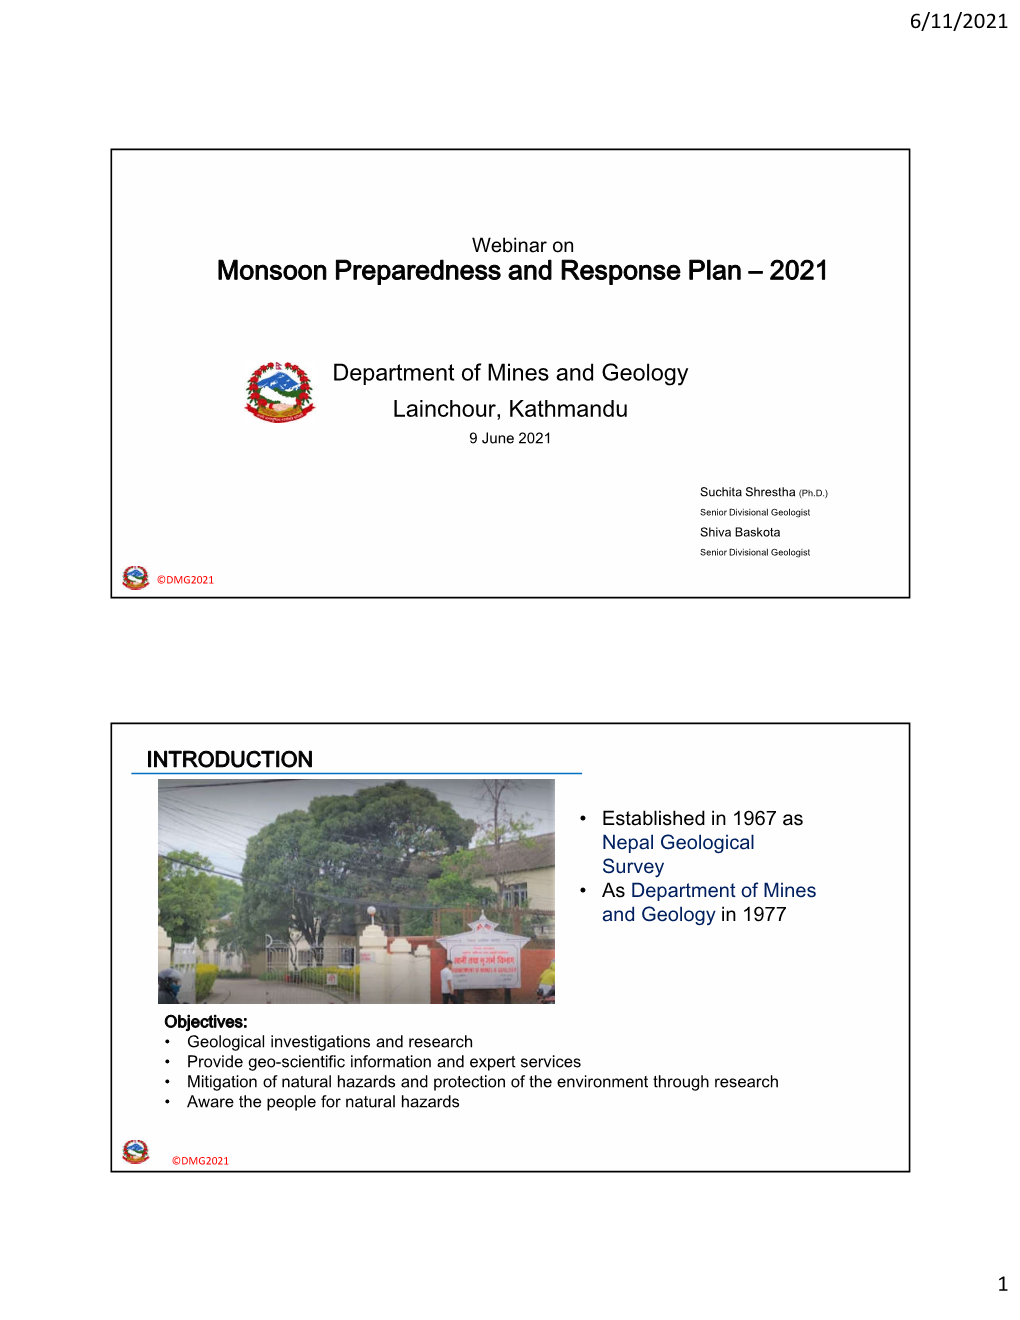 Monsoon Preparedness and Response Plan – 2021